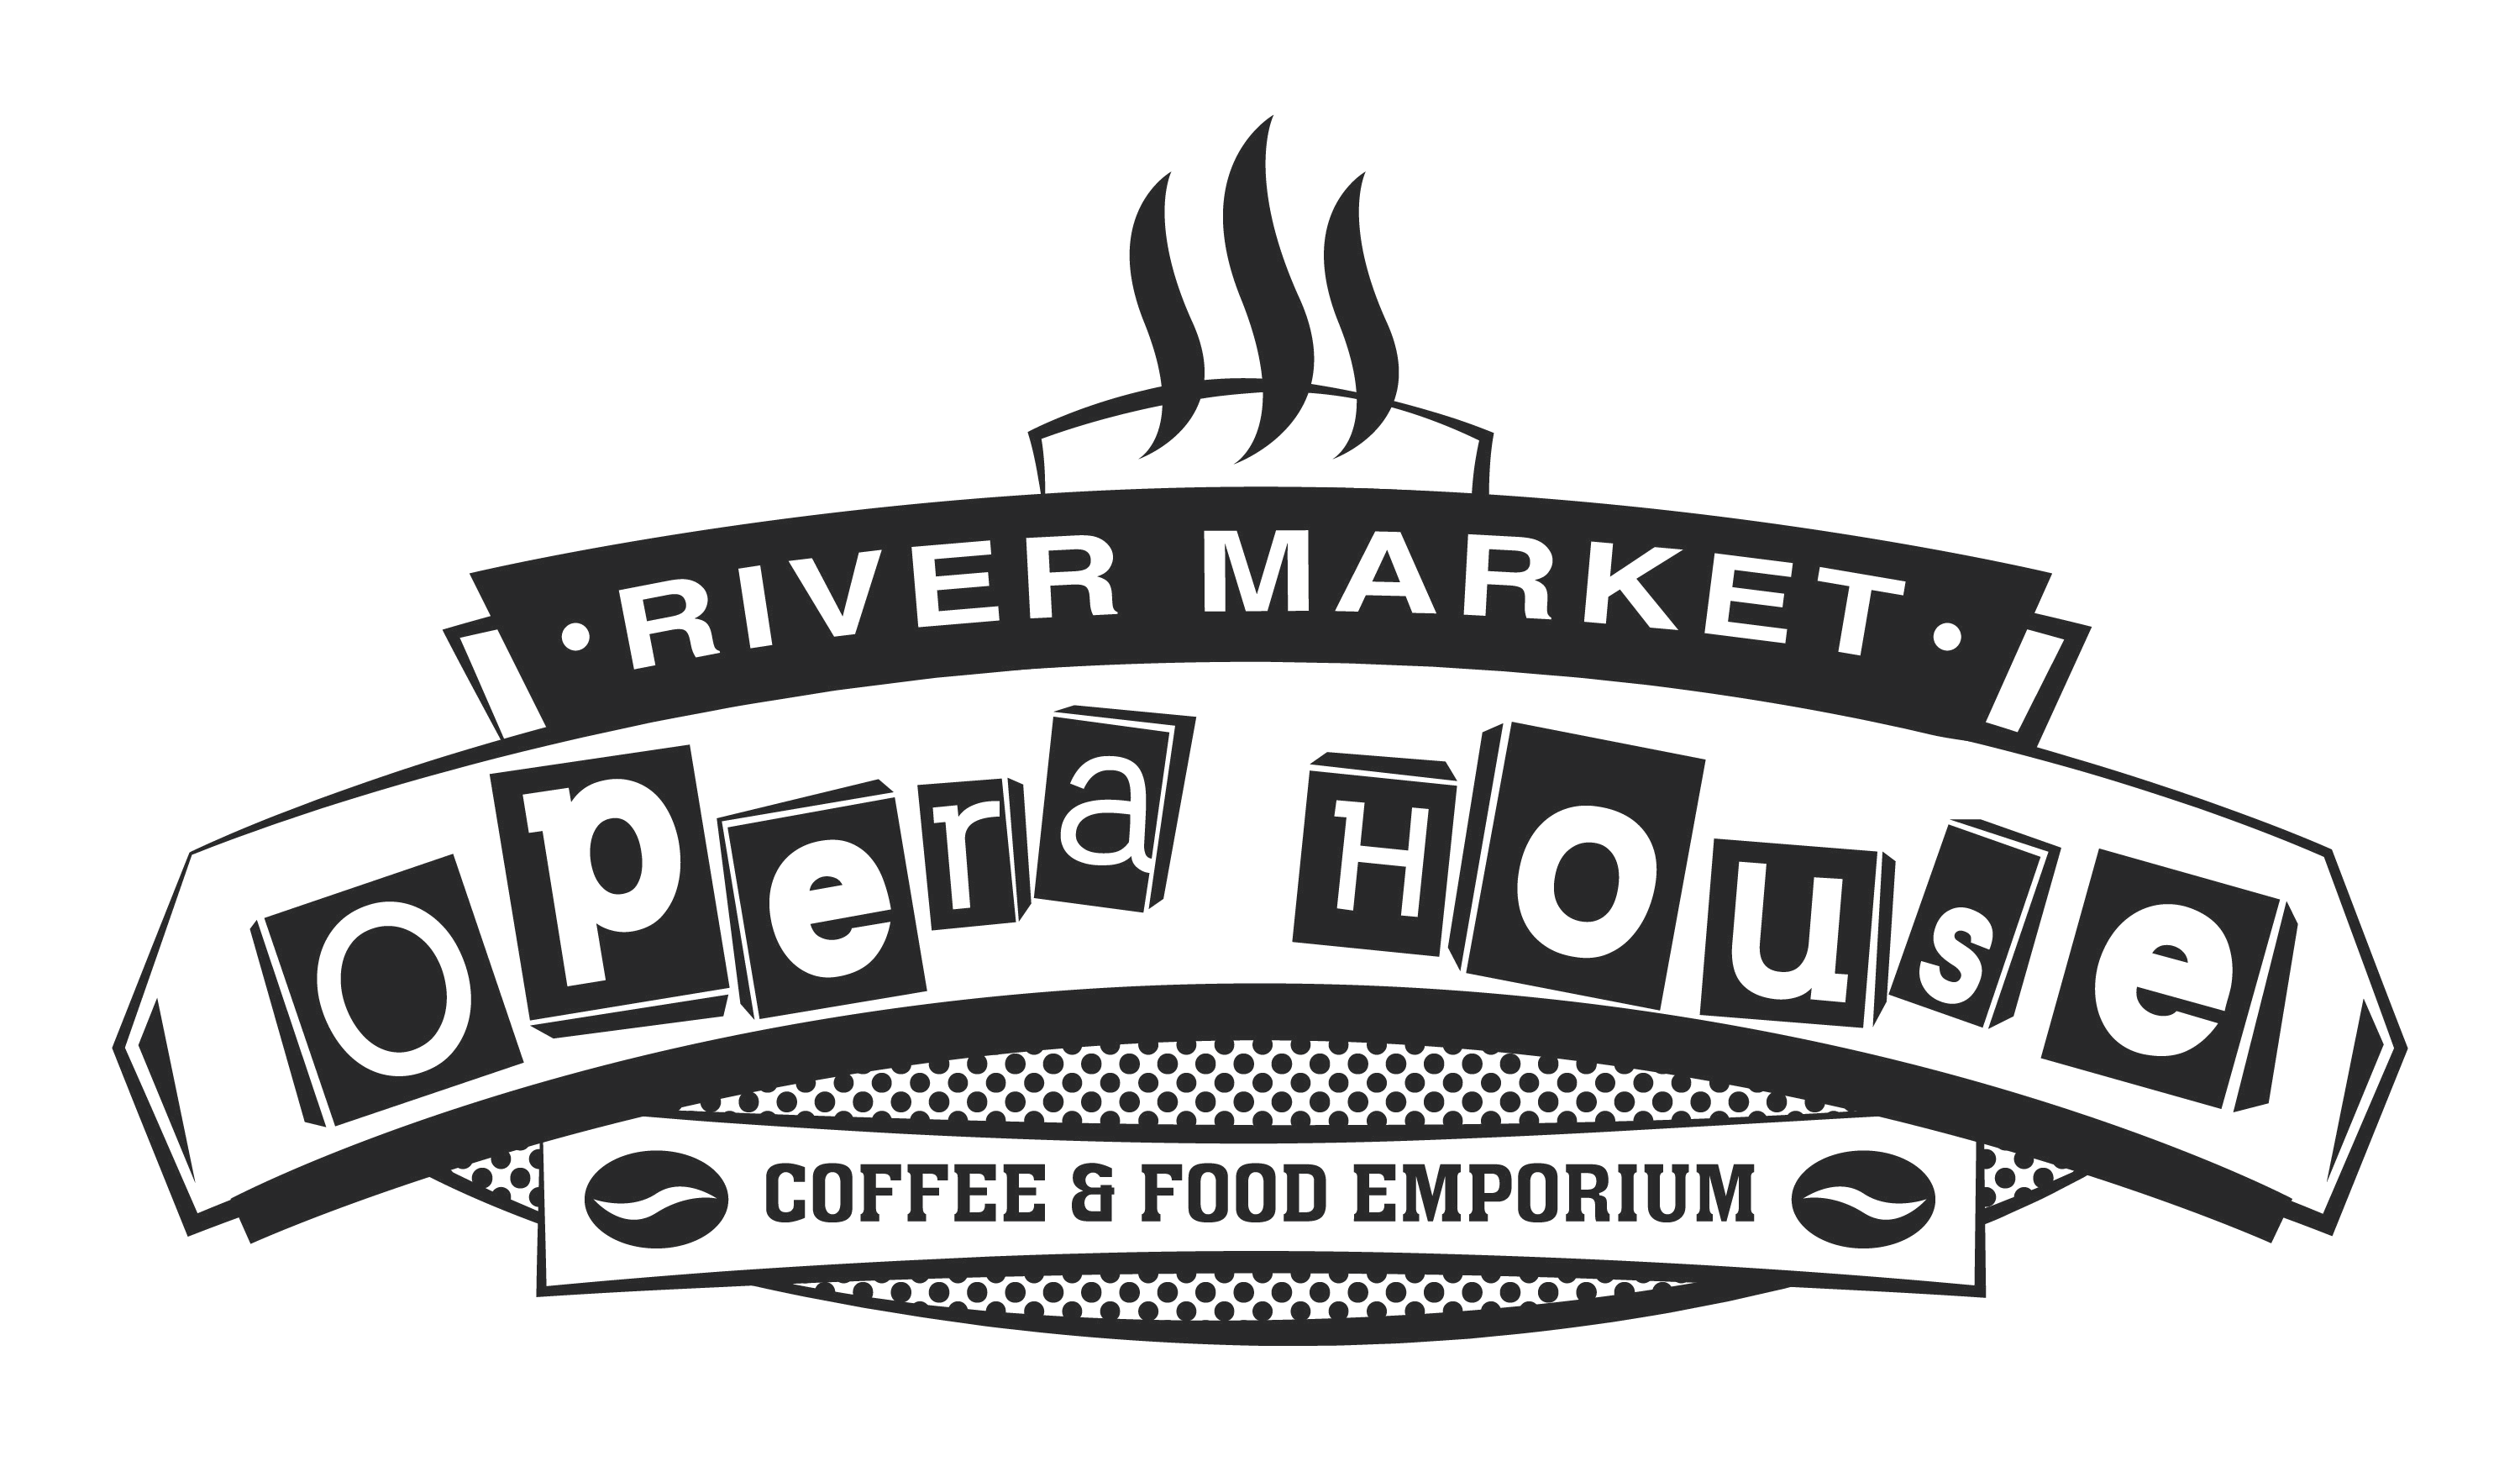 The Opera House | River Market's and Kansas City's Coffee Shop and Café